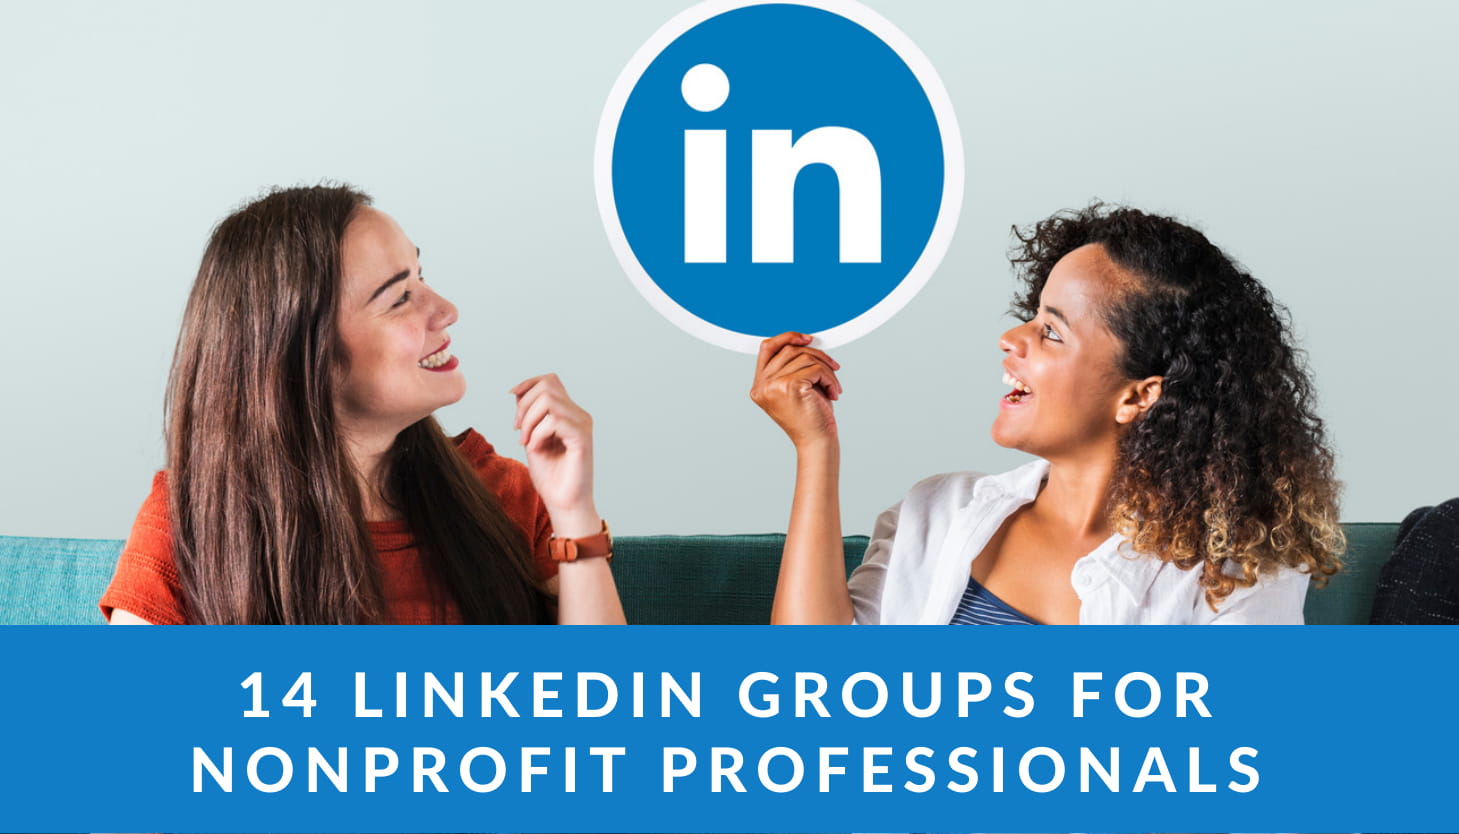 14 LinkedIn Groups for Nonprofit Professionals